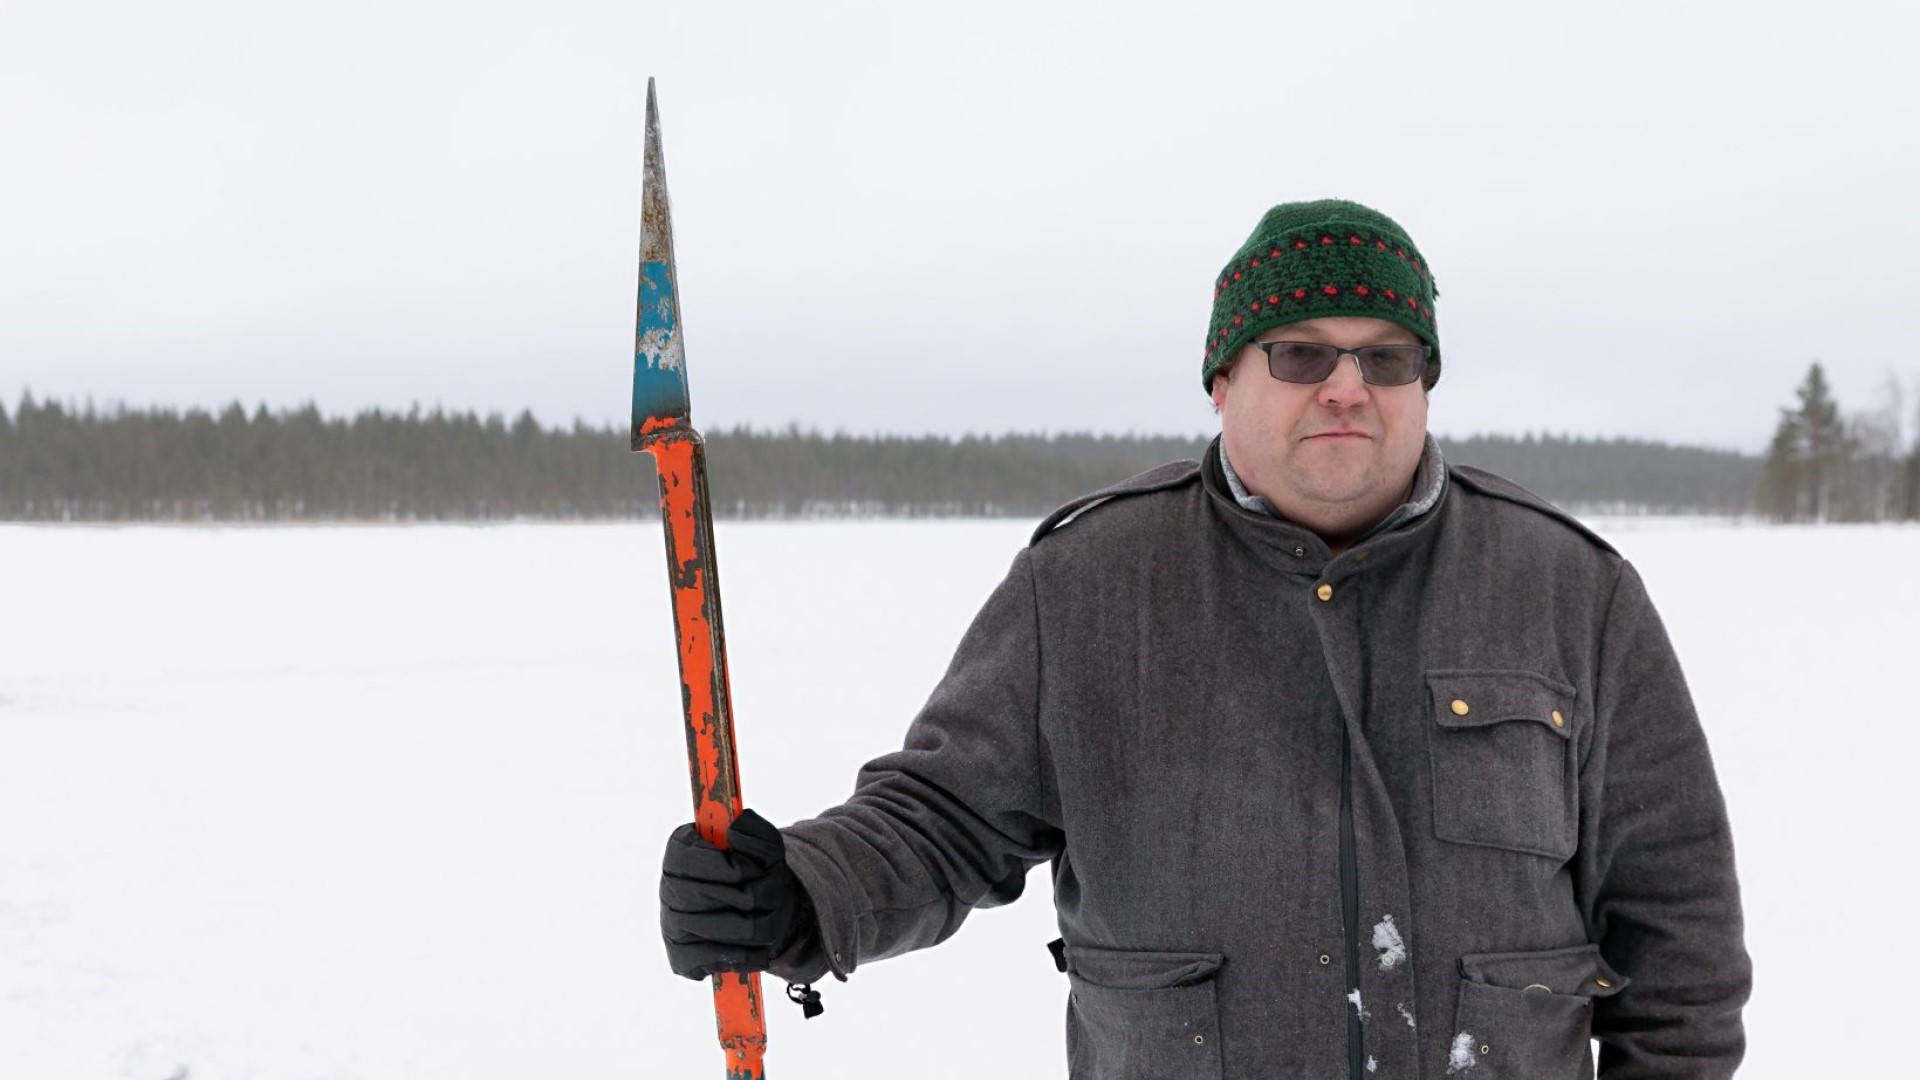 Tero Mustonen, the founder of Snowchange Cooperative, receives the Goldman Environmental Prize